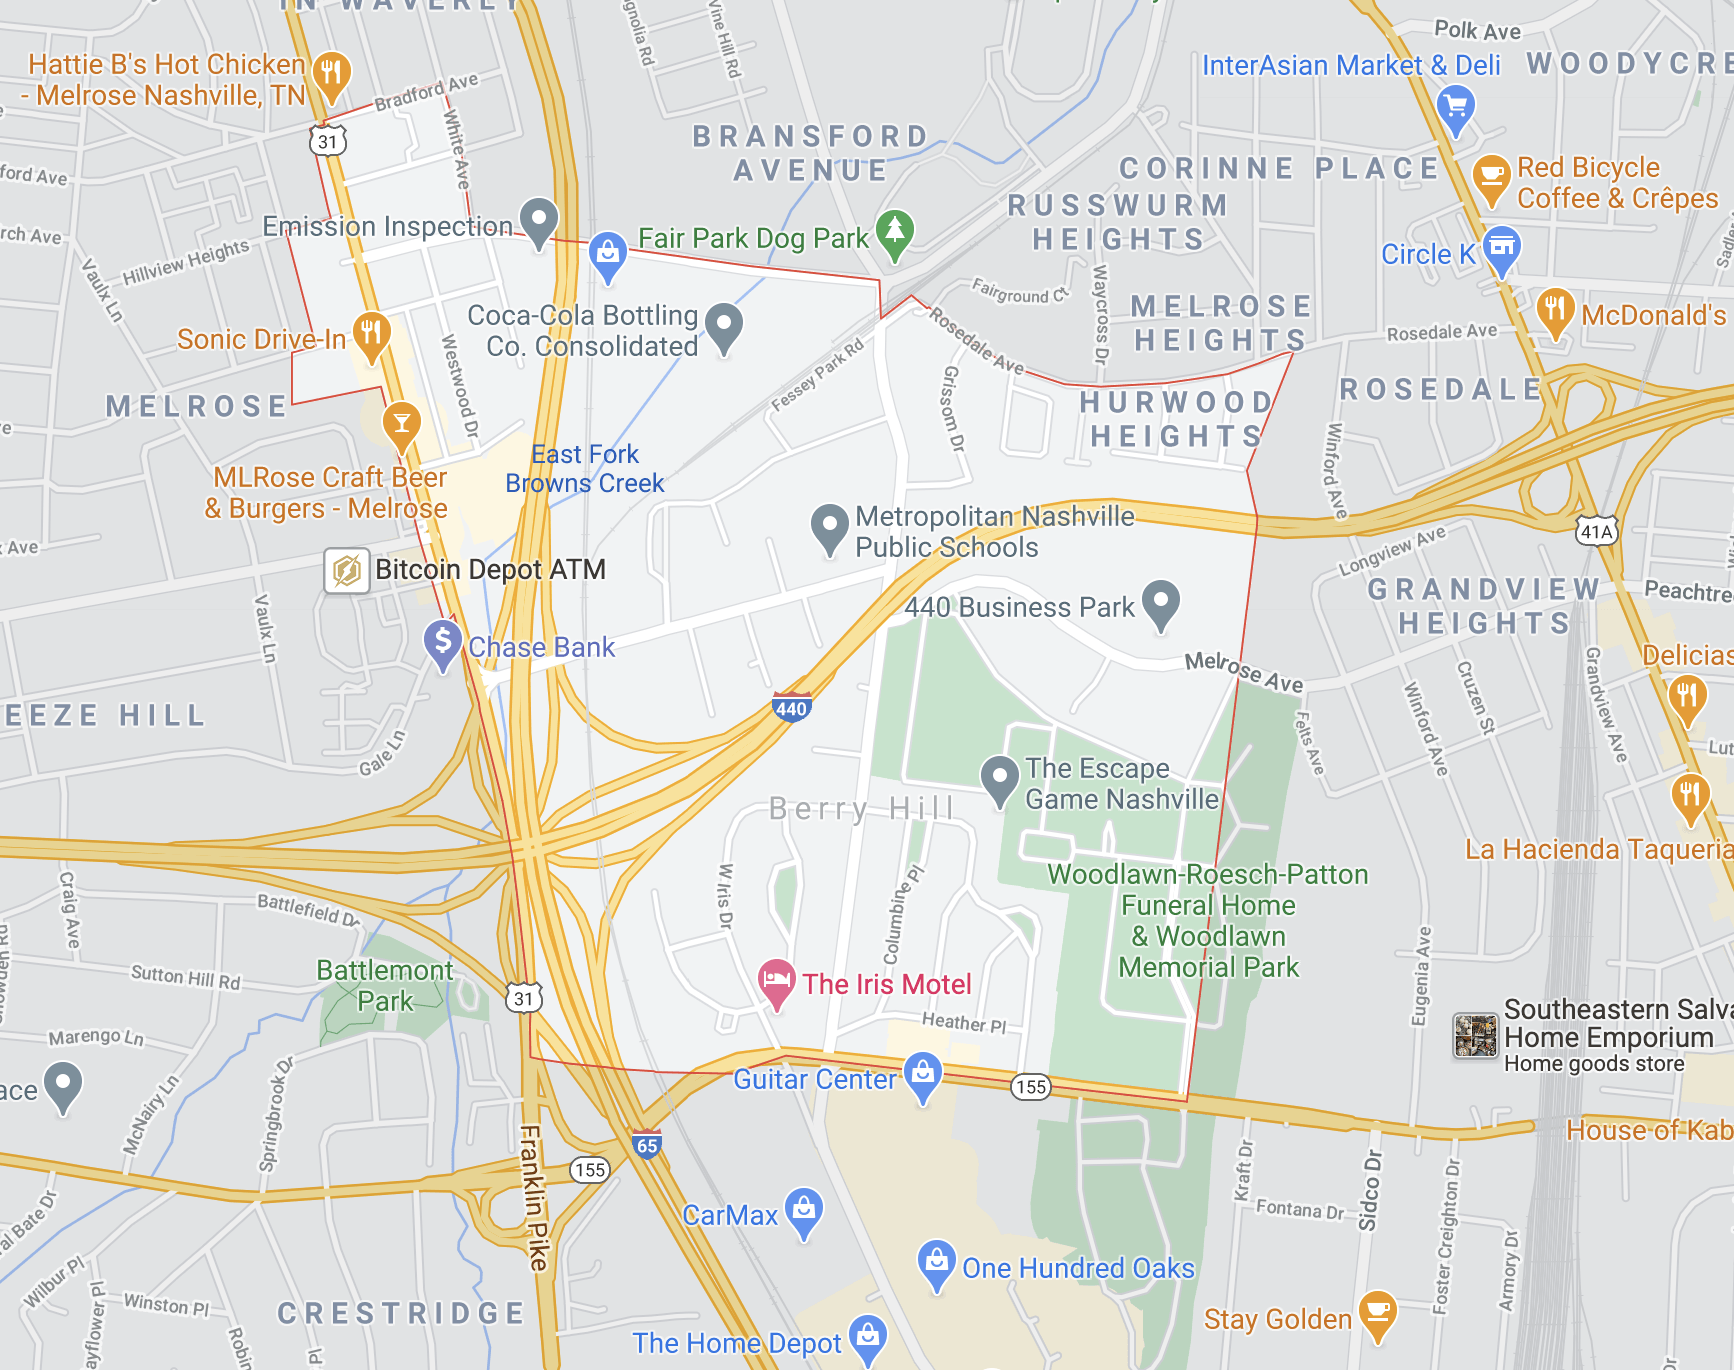 map of Berry Hill neighborhood Nashville